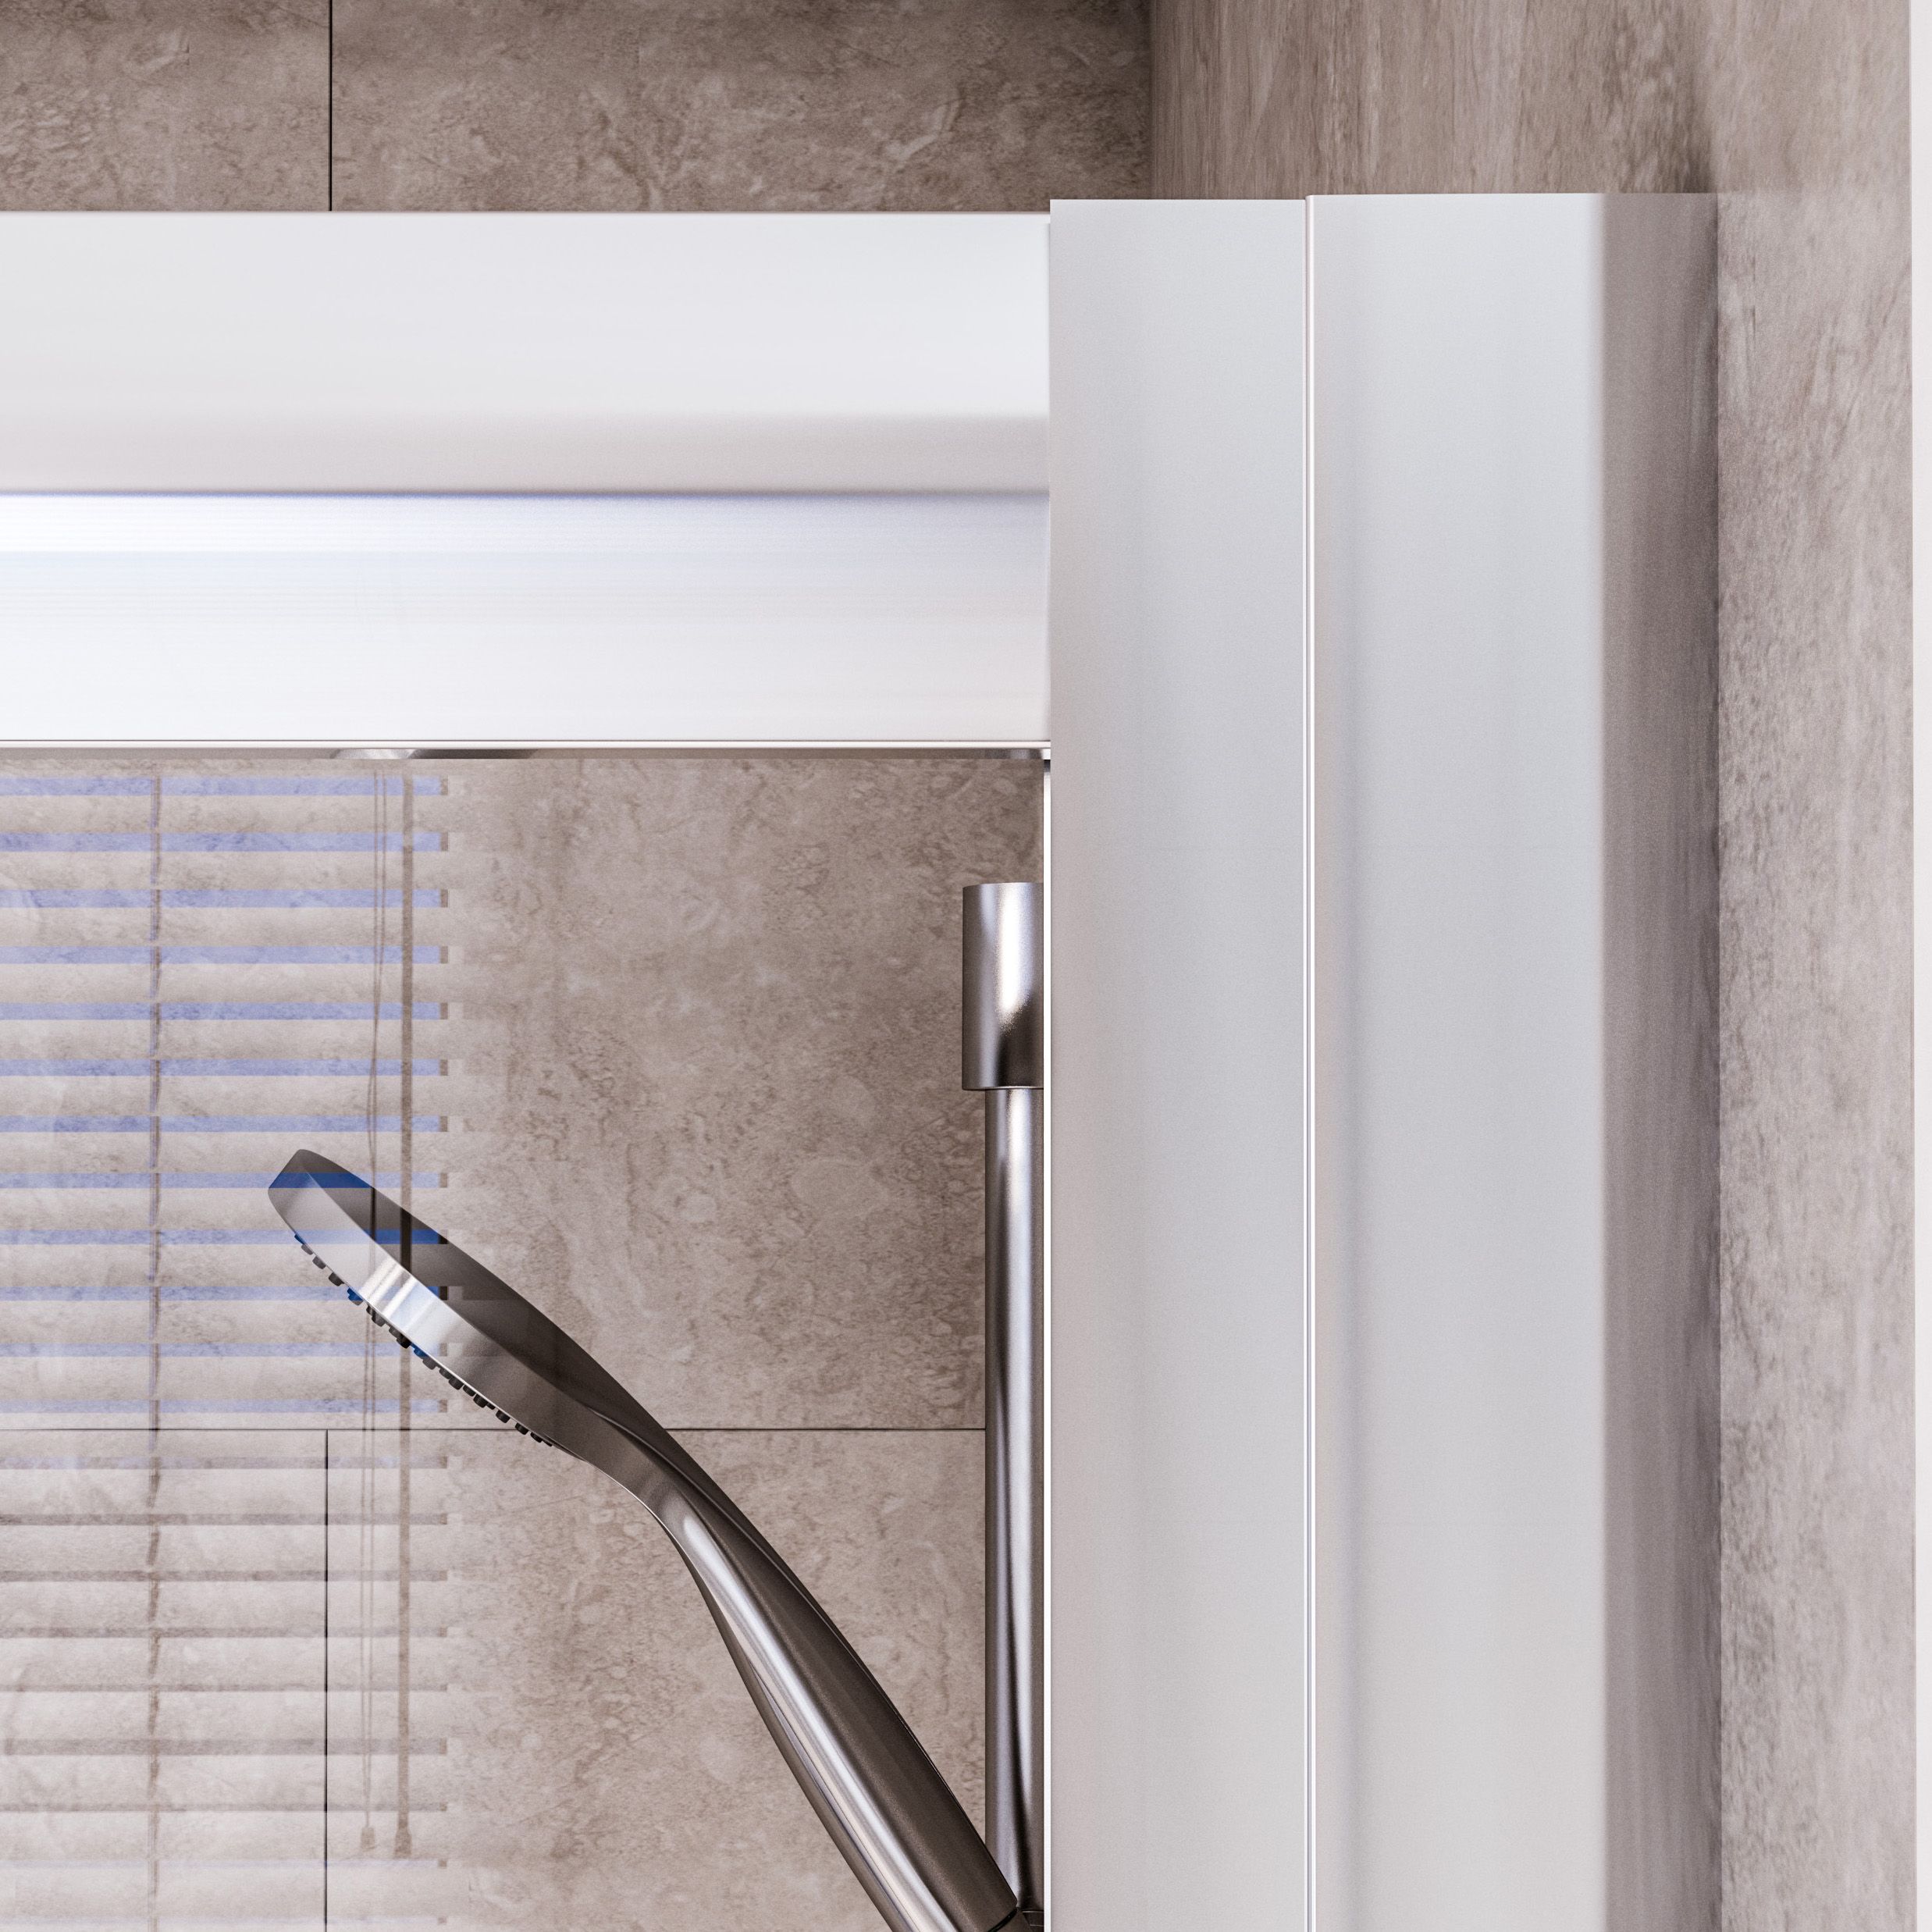 Aqualux Edge 8 Semi-framed Silver effect Clear glass Sliding Shower Door (H)203.5cm (W)140cm